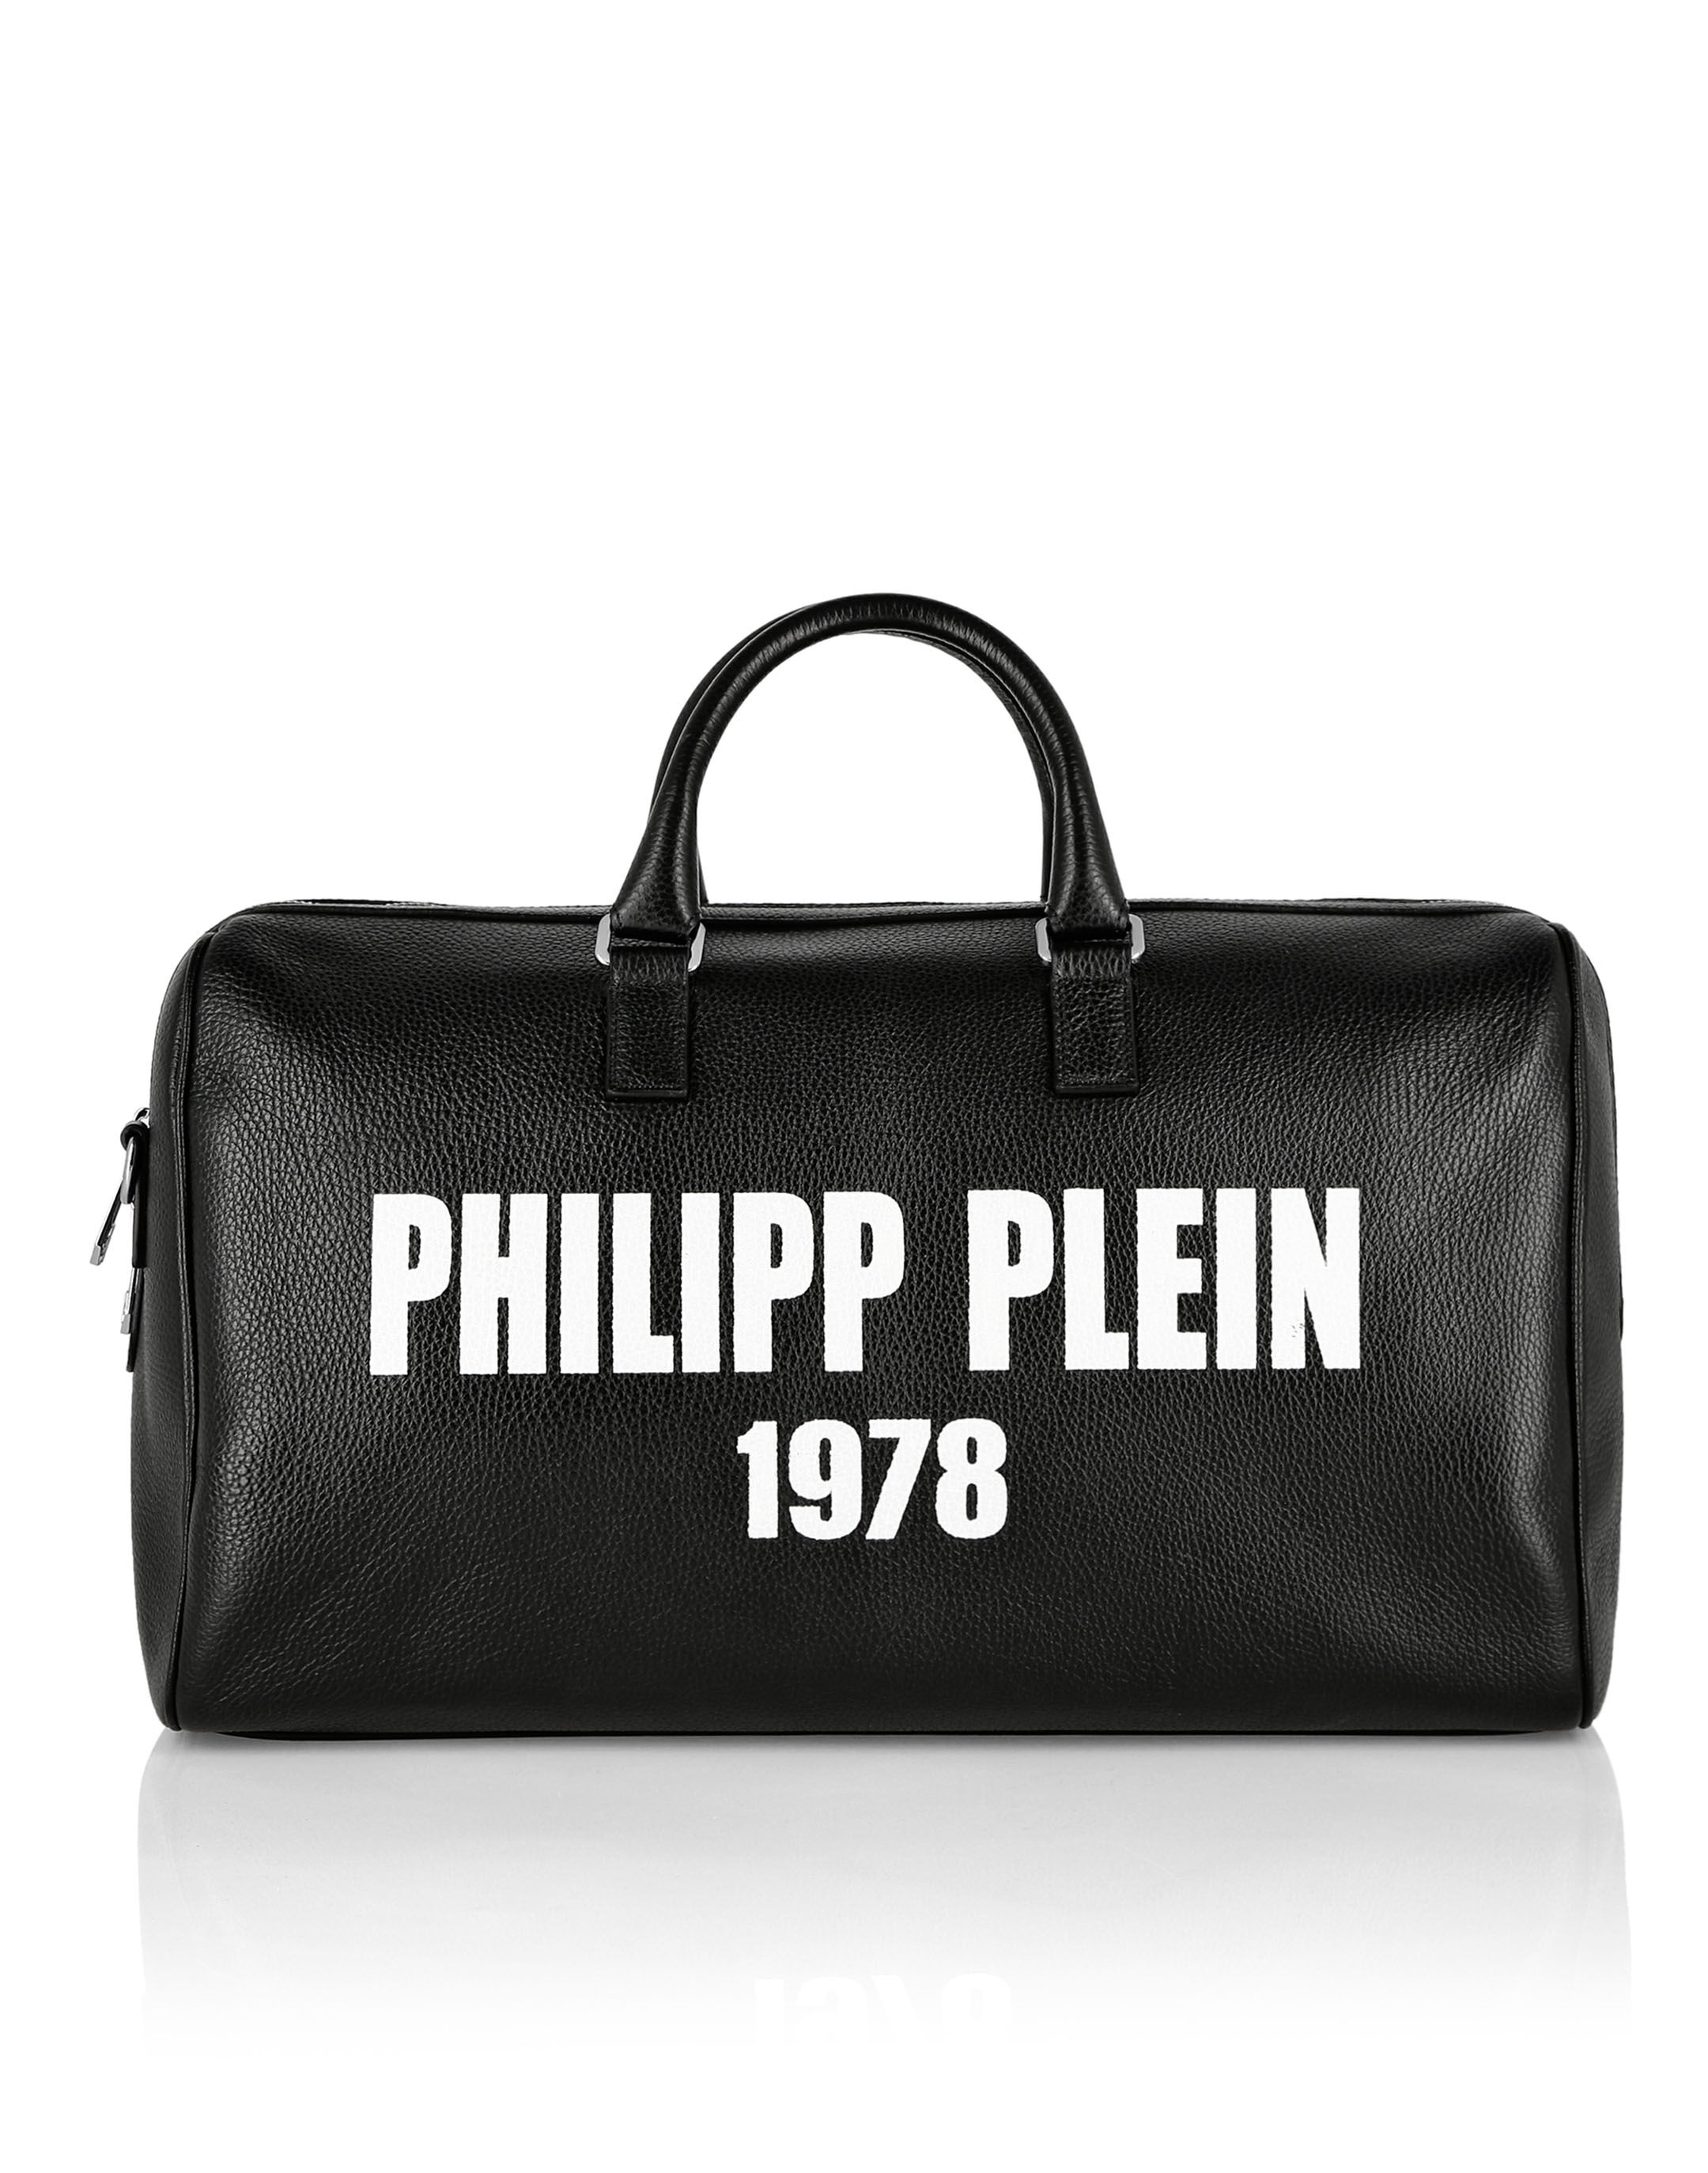 philipp plein bag price